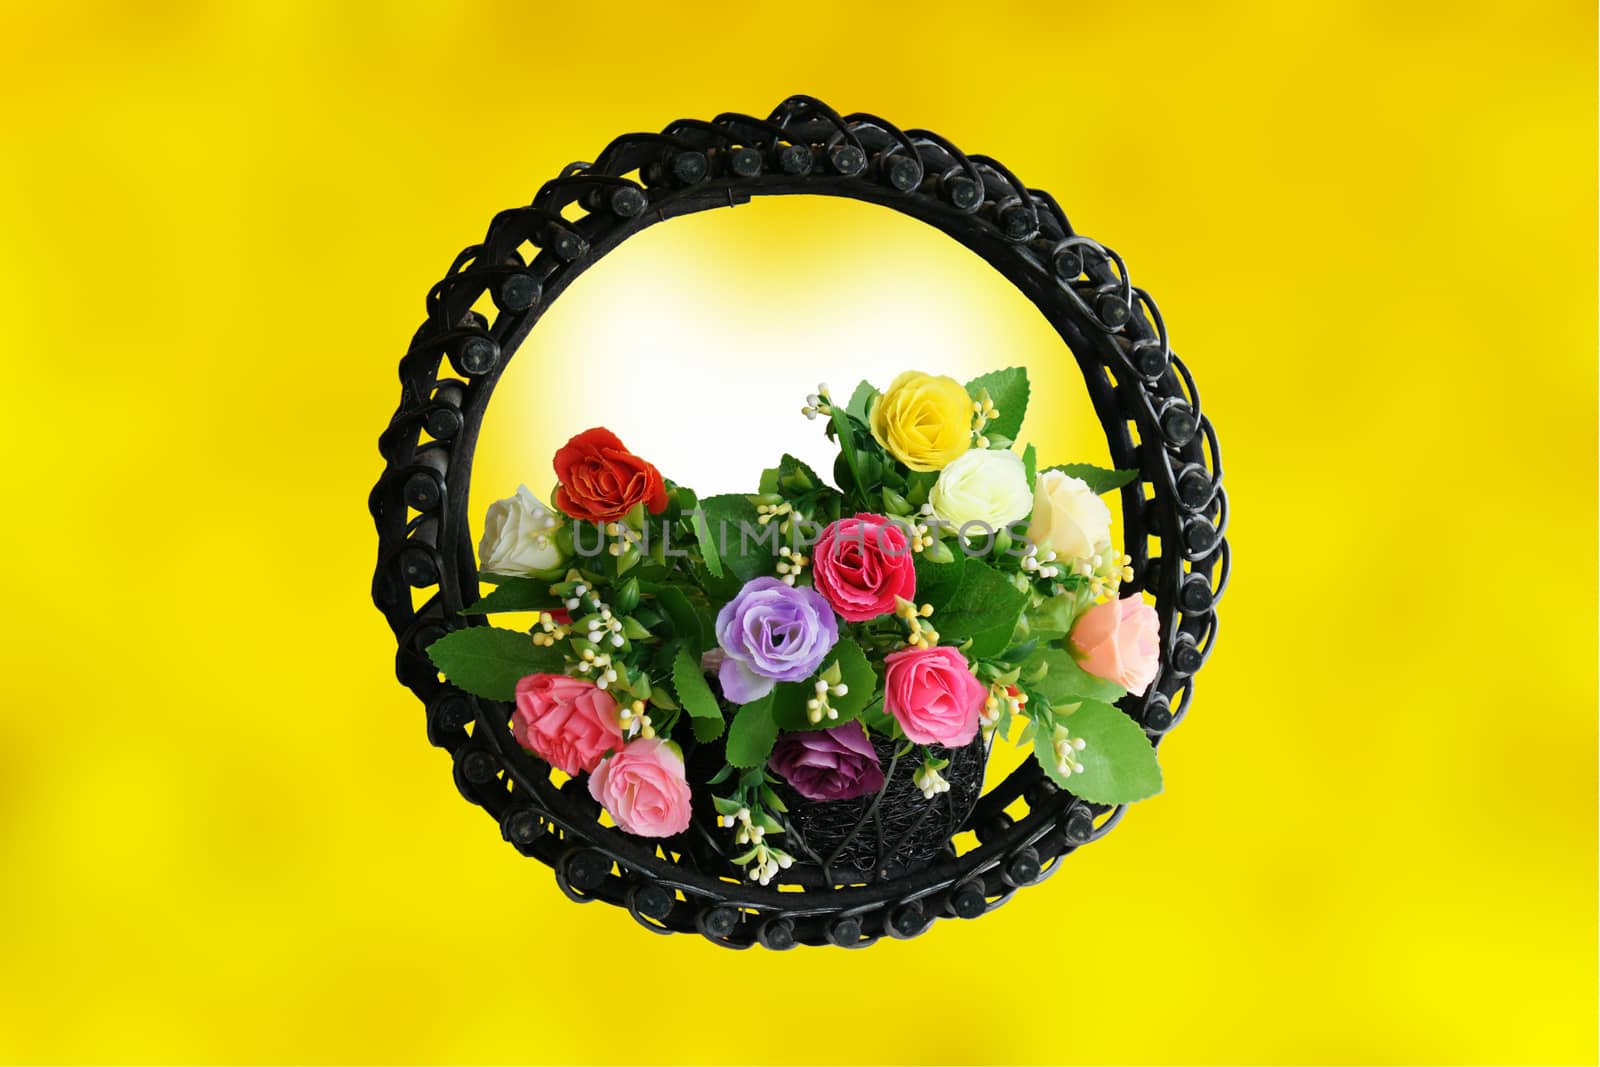 Rose basket on yellow background